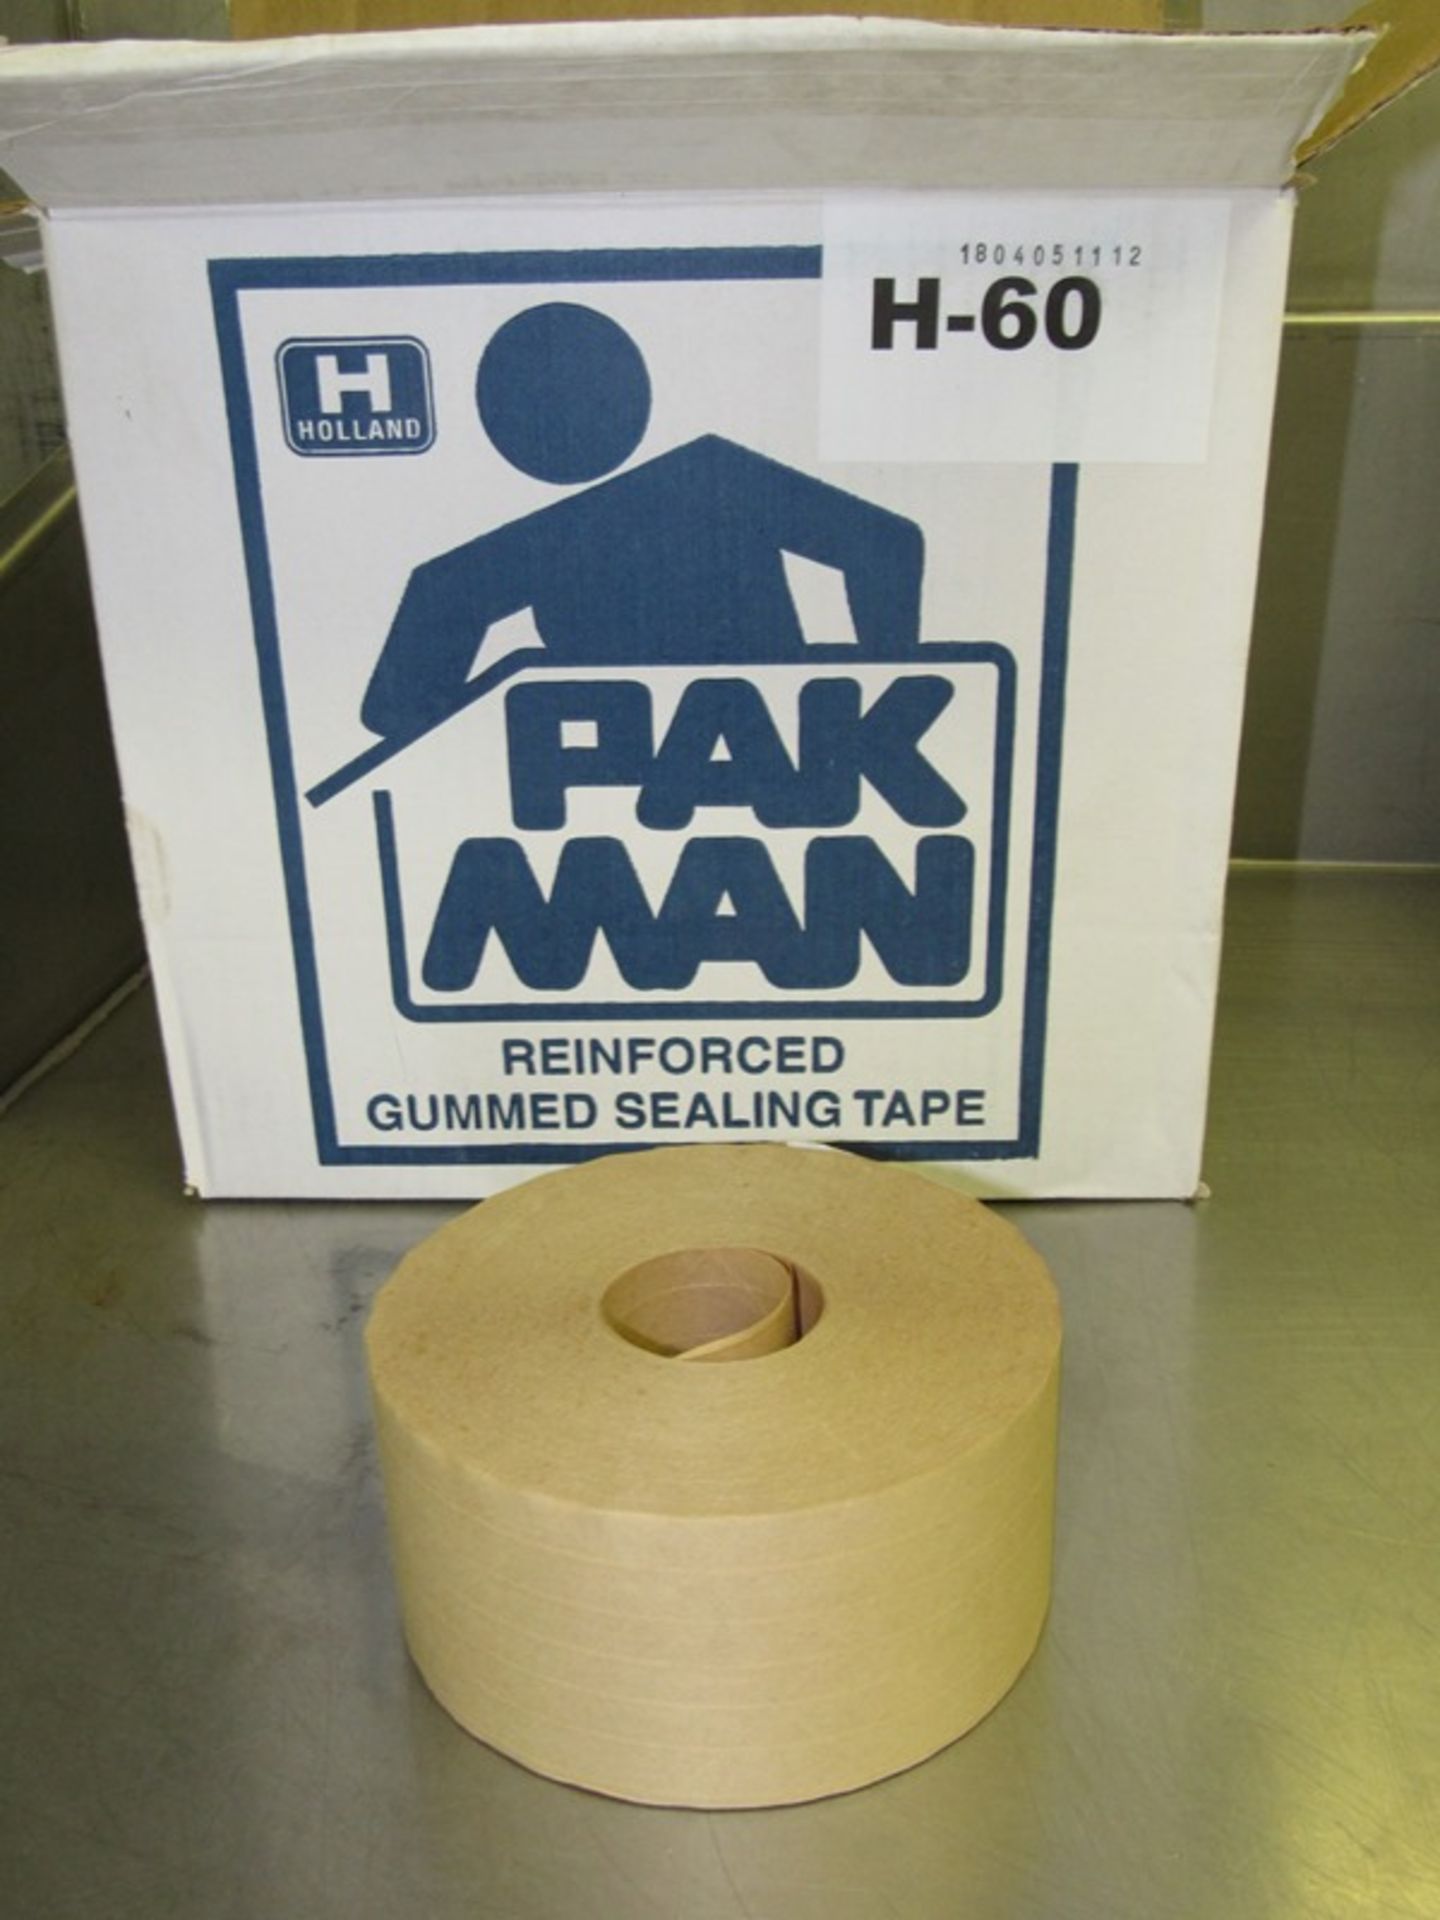 Lot of Pak Man (7) Cases Reinforced Sealing Tape, 8 rolls/case, 3" W X 375' L rolls (All Funds Must